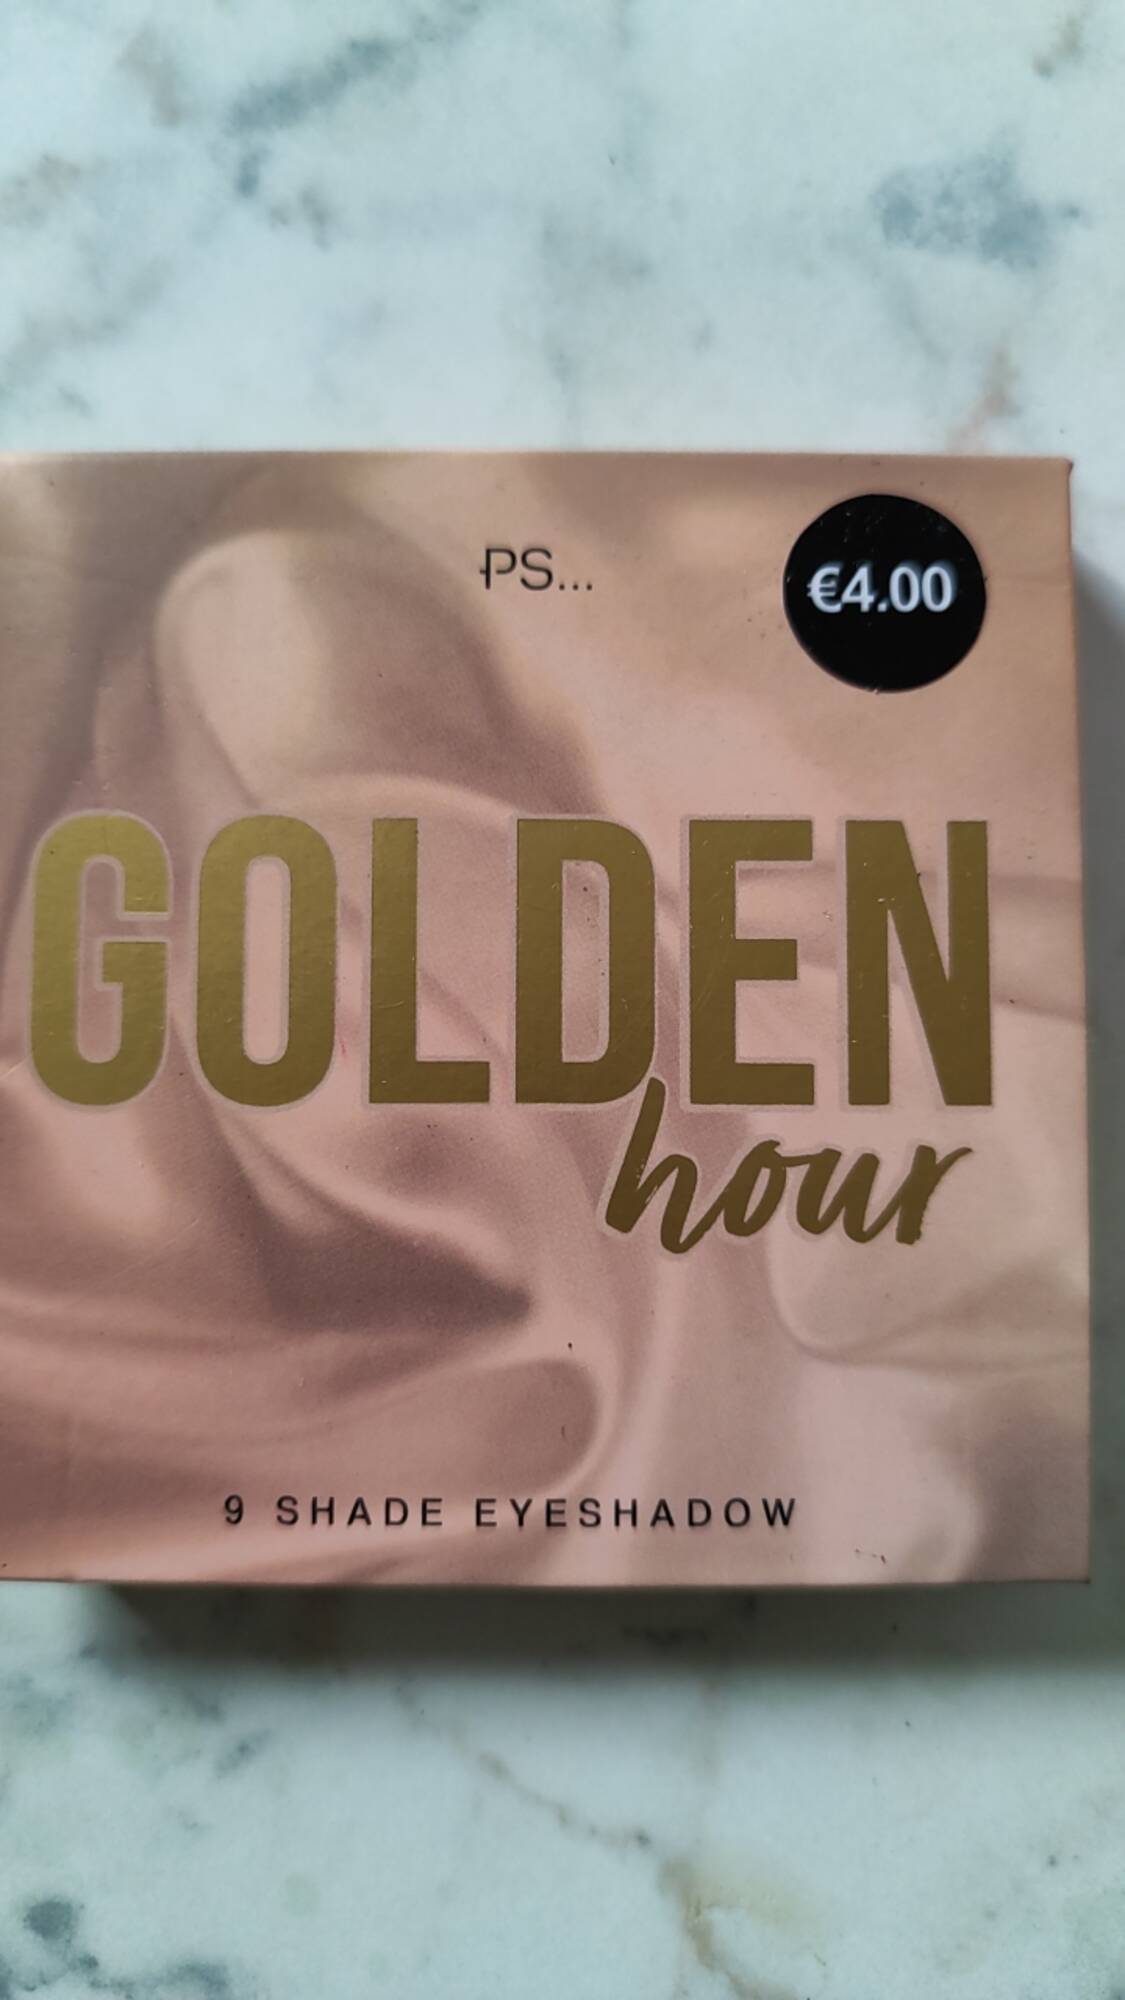 PRIMARK - Golden hour - 9 shade eyeshadow